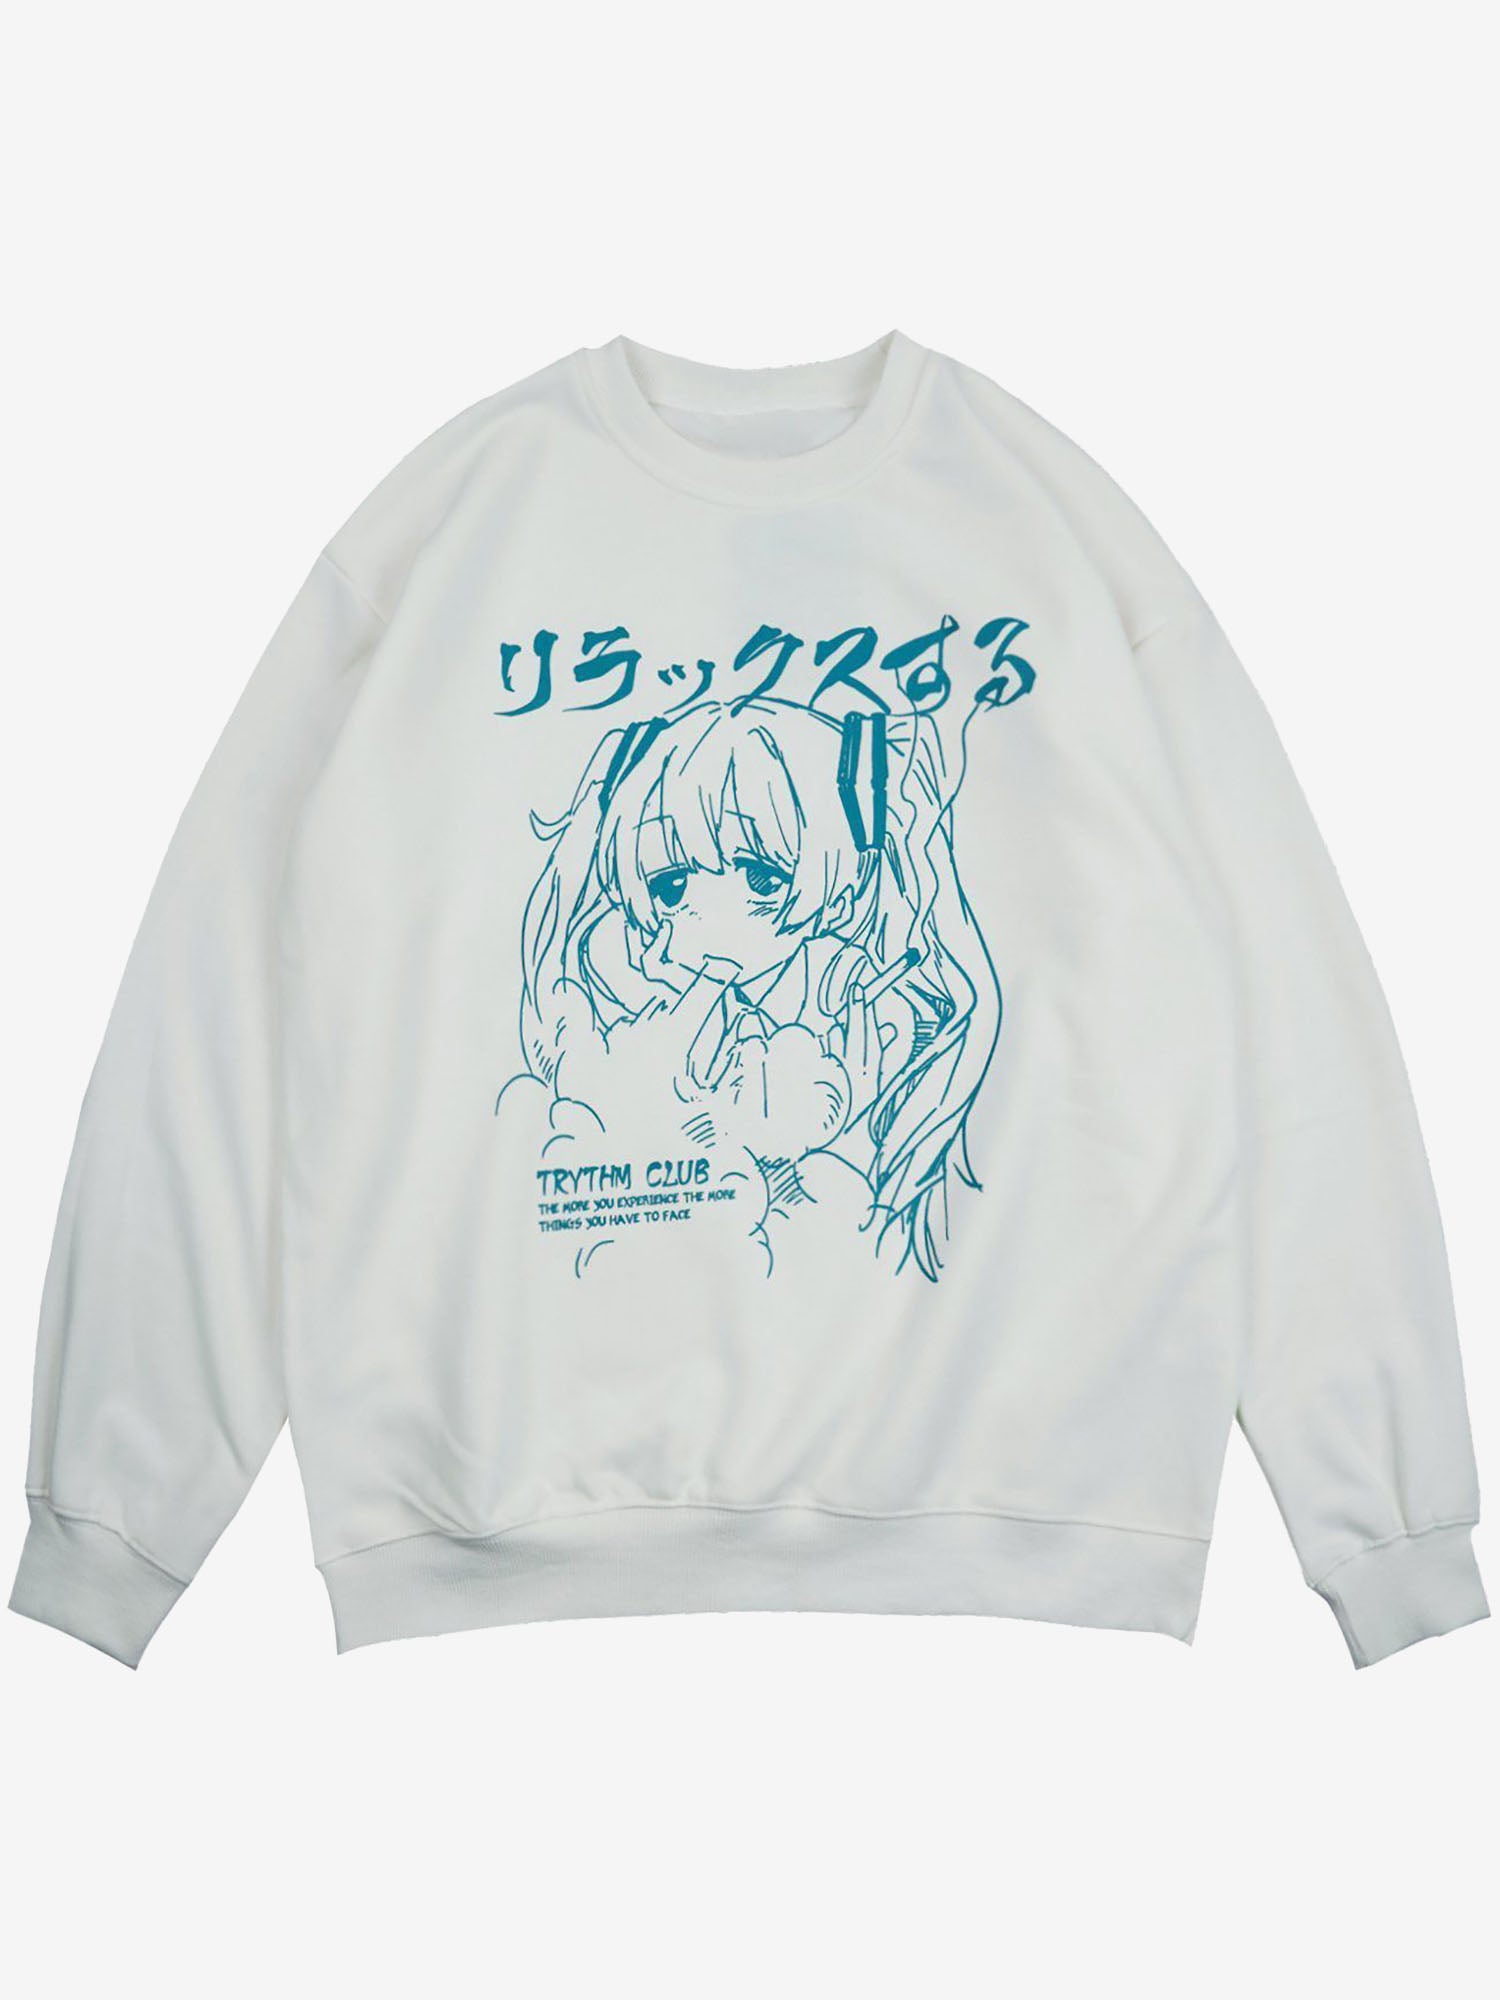 JUSTNOTAG Japanese Cartoon Anime Girl Print Sweatshirt